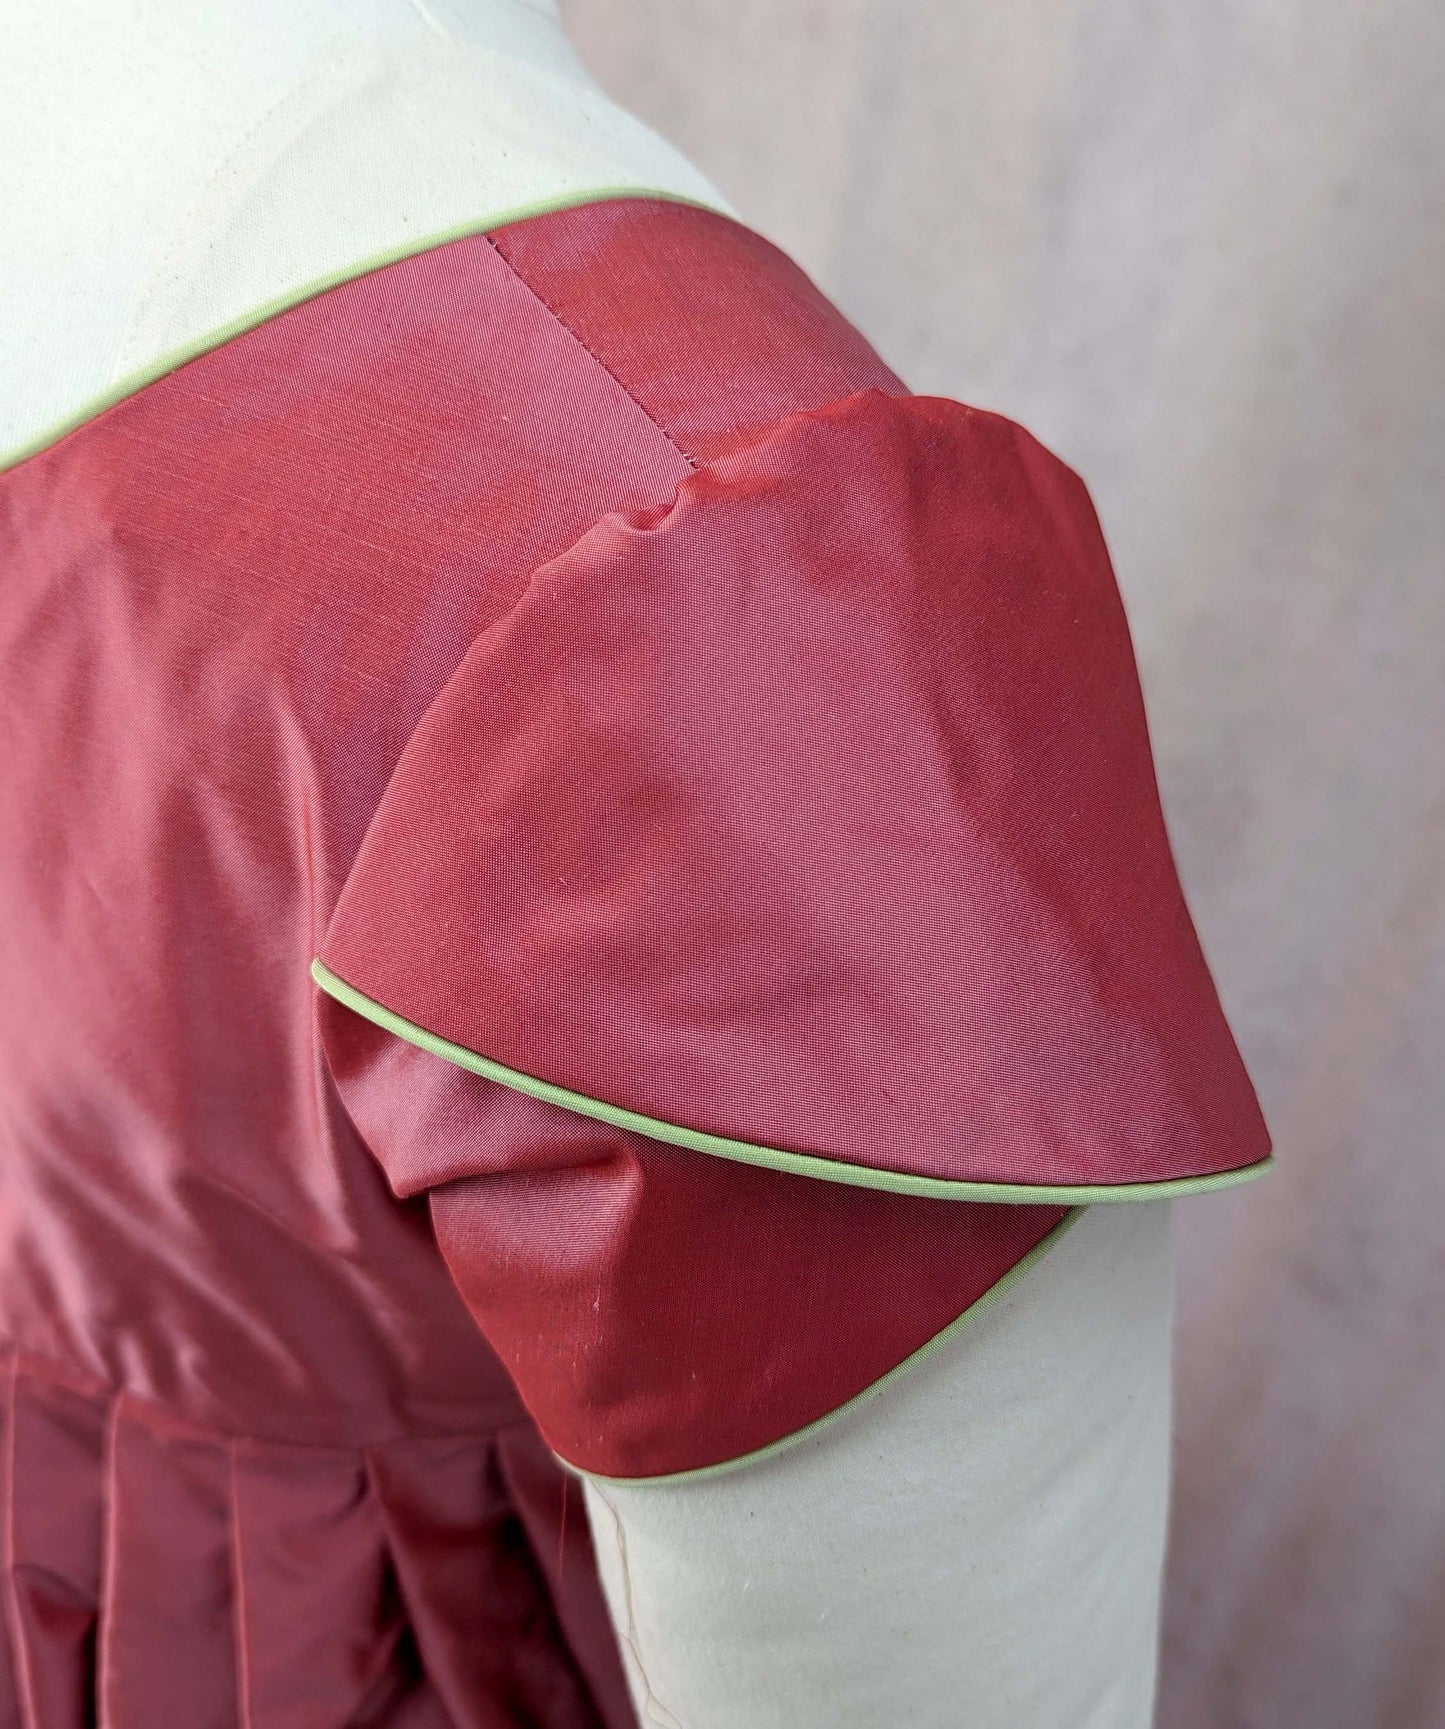 #0223 Regency Kleid mit Tulpenärmeln Schnittmuster Größe EU 34-56 Papierschnittmuster